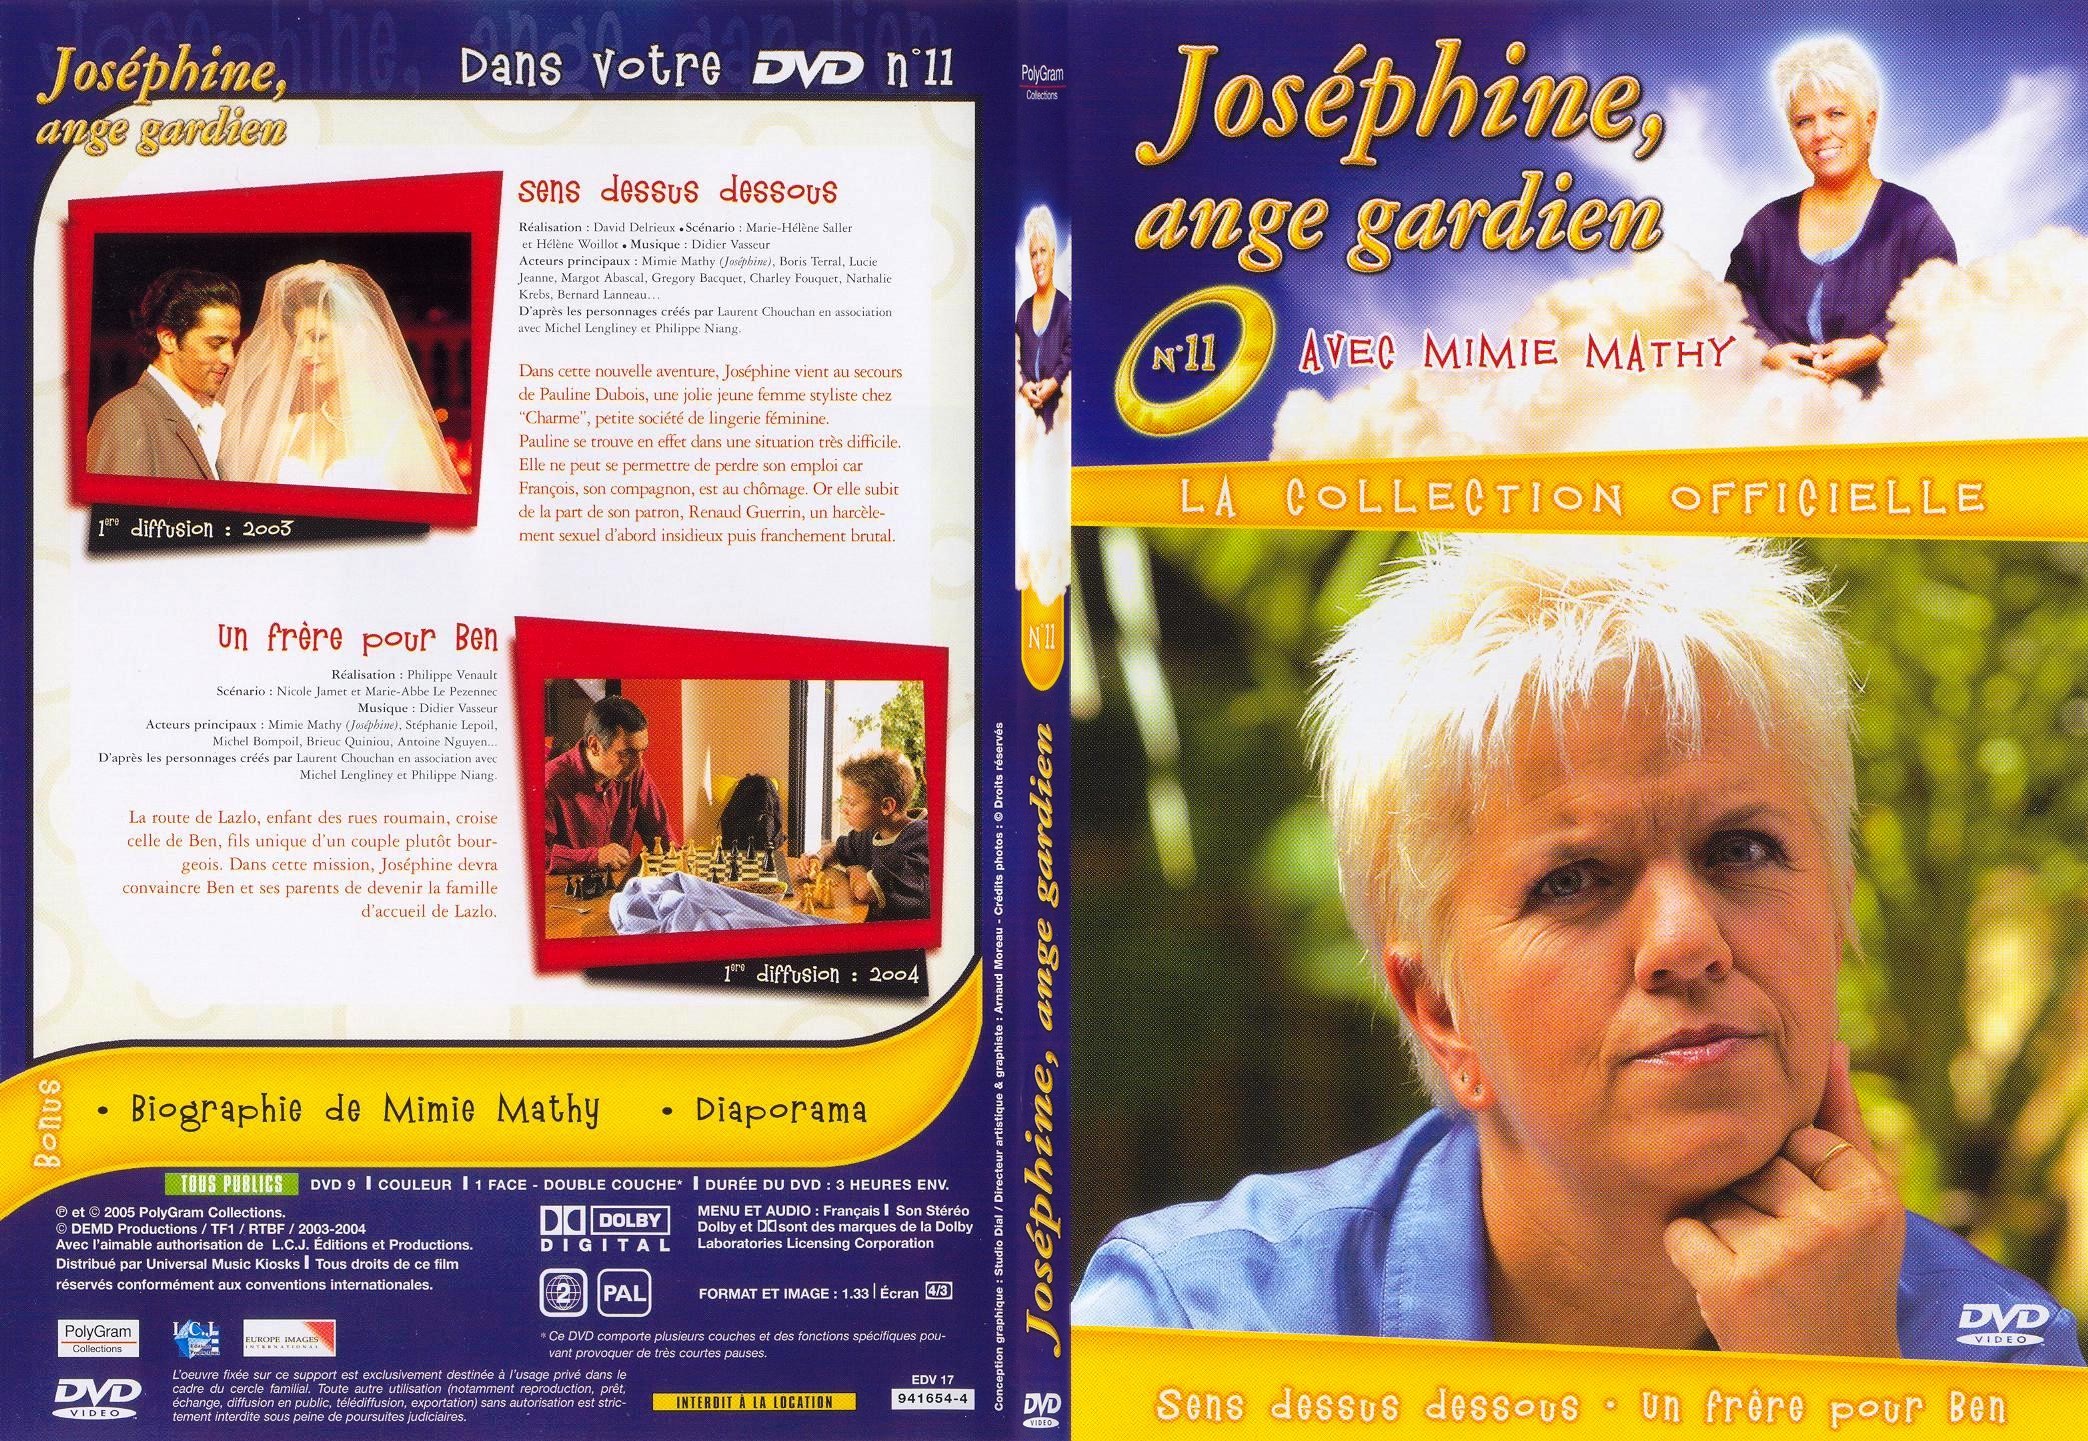 Jaquette DVD Josephine ange gardien vol 11 - SLIM